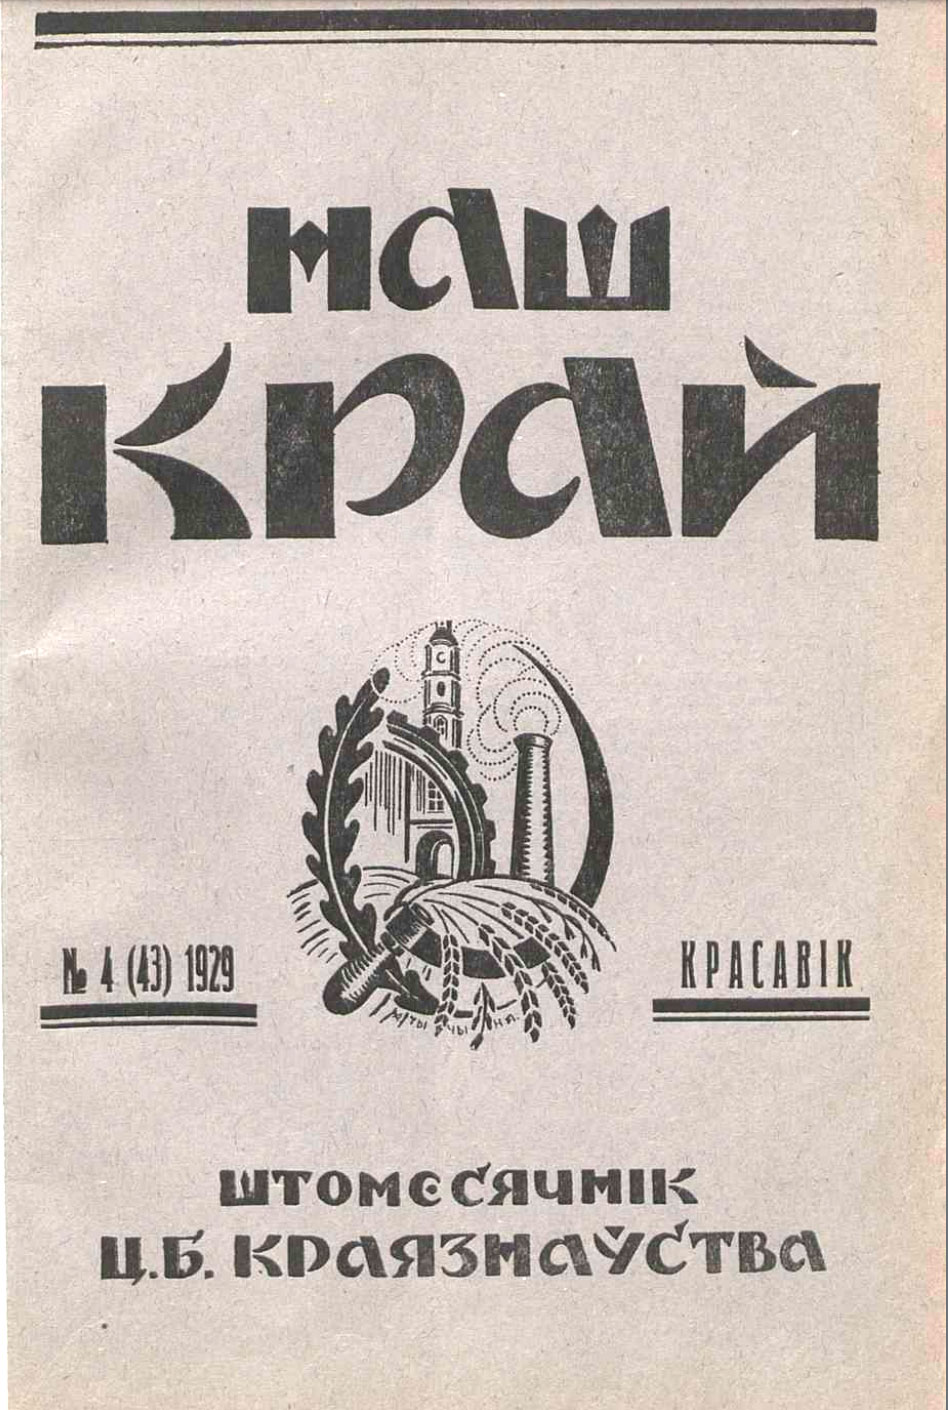 Обложка беларуского журнала «Наш край» за апрель 1929 года.